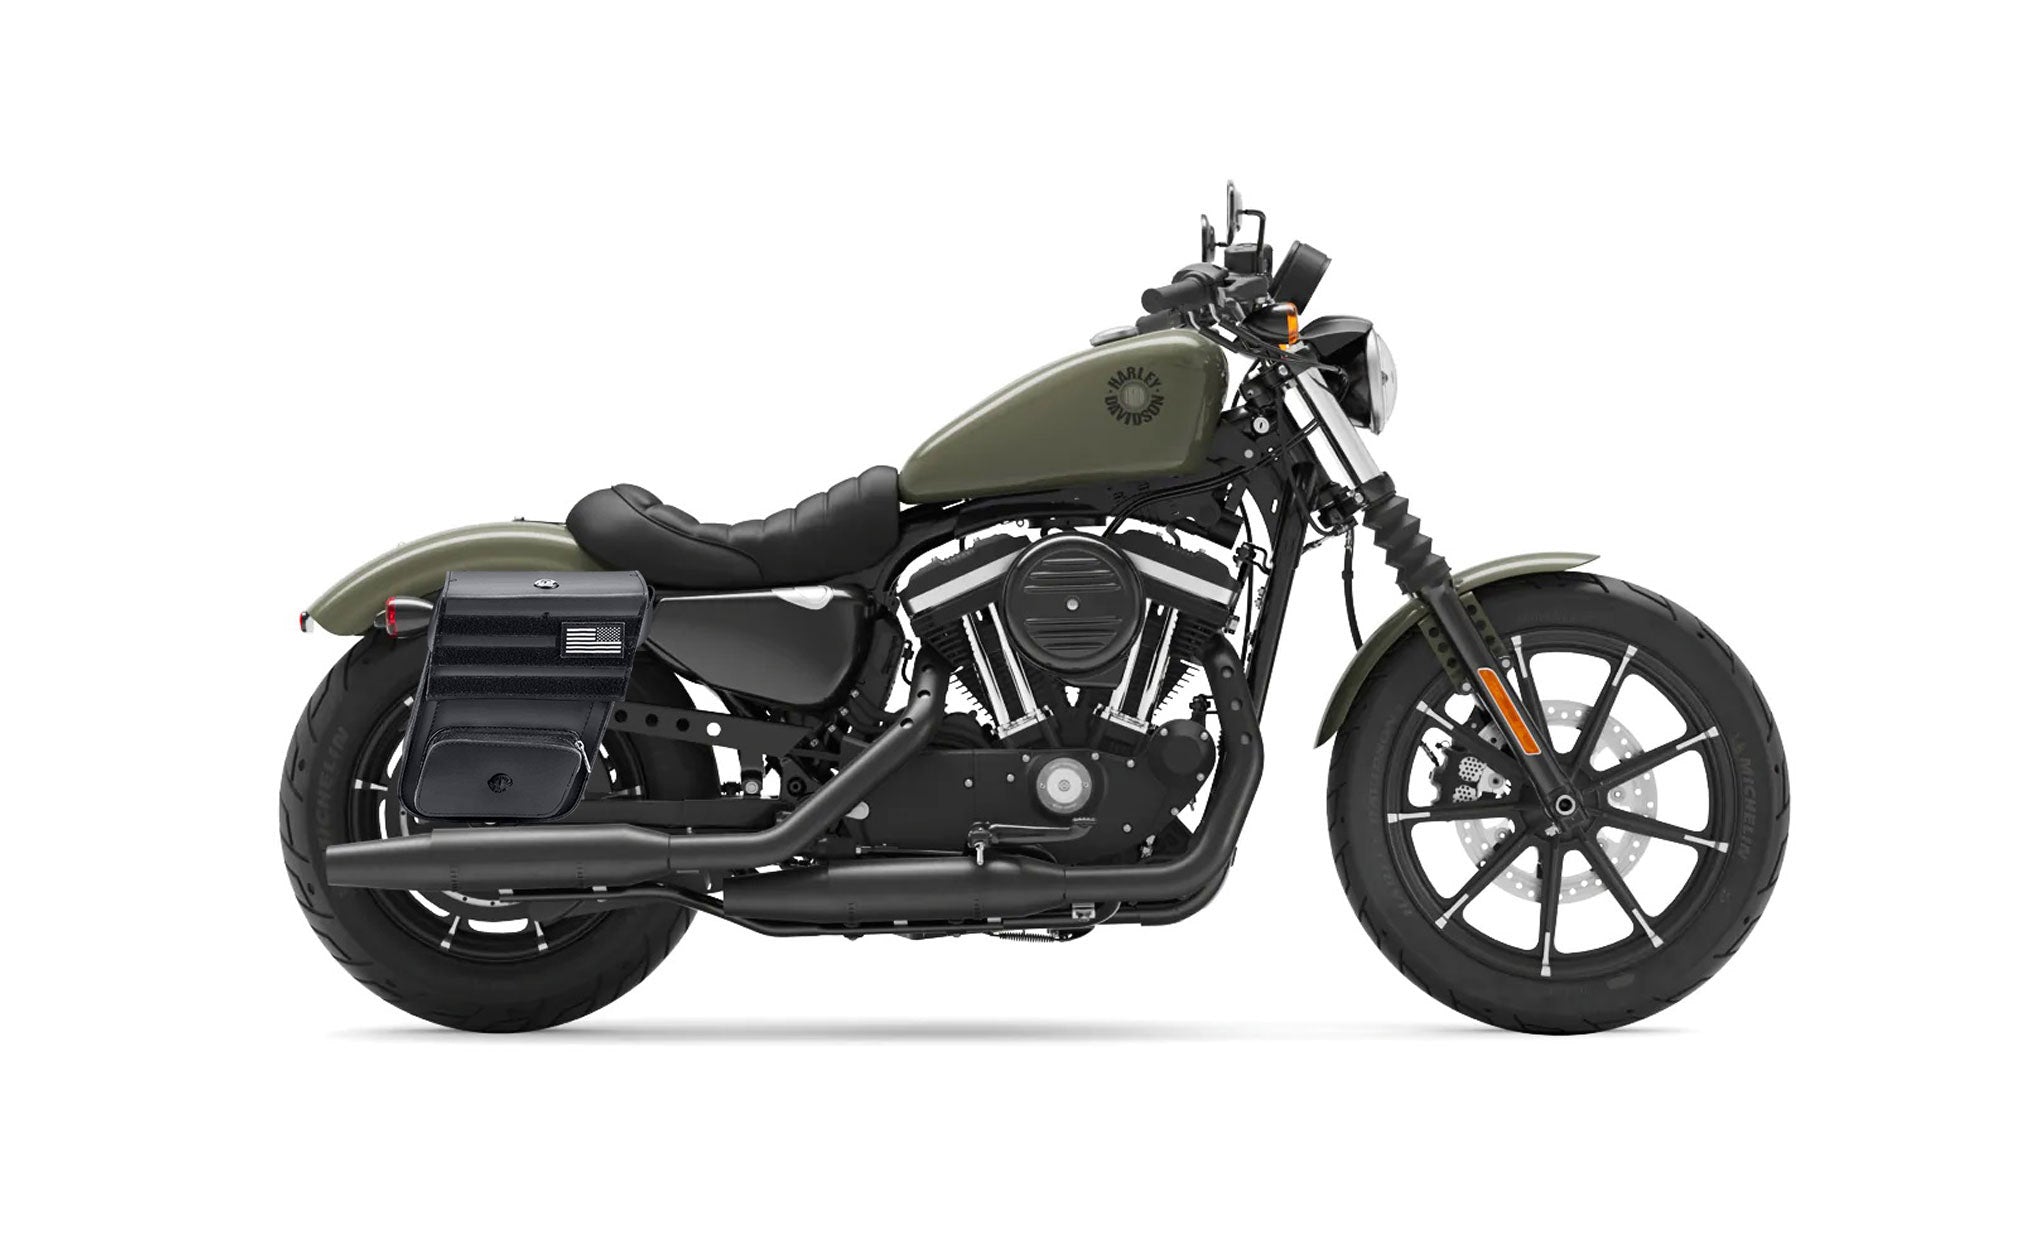 Viking Military Medium Leather Motorcycle Saddlebags For Harley Sportster 883 Iron Xl883N on Bike Photo @expand